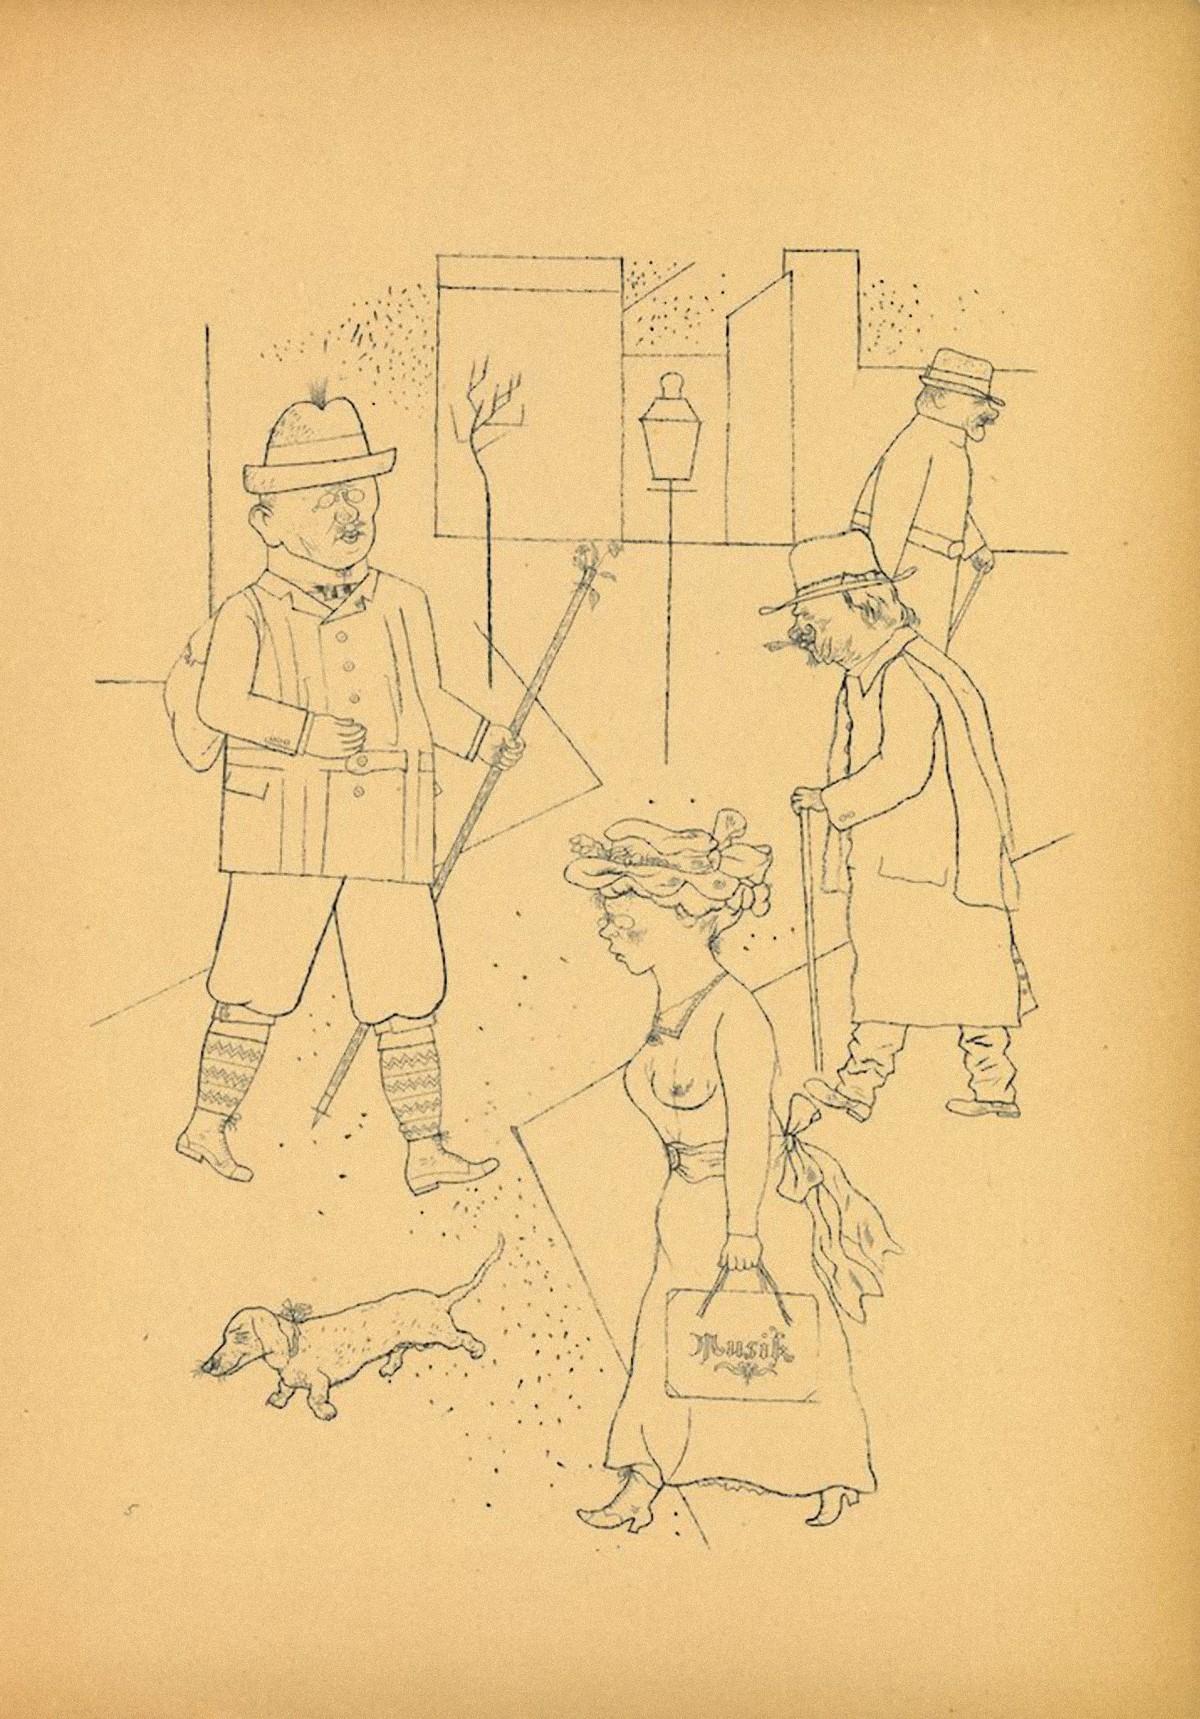 Greeting - Offset et lithographie d'origine de George Grosz - 1923